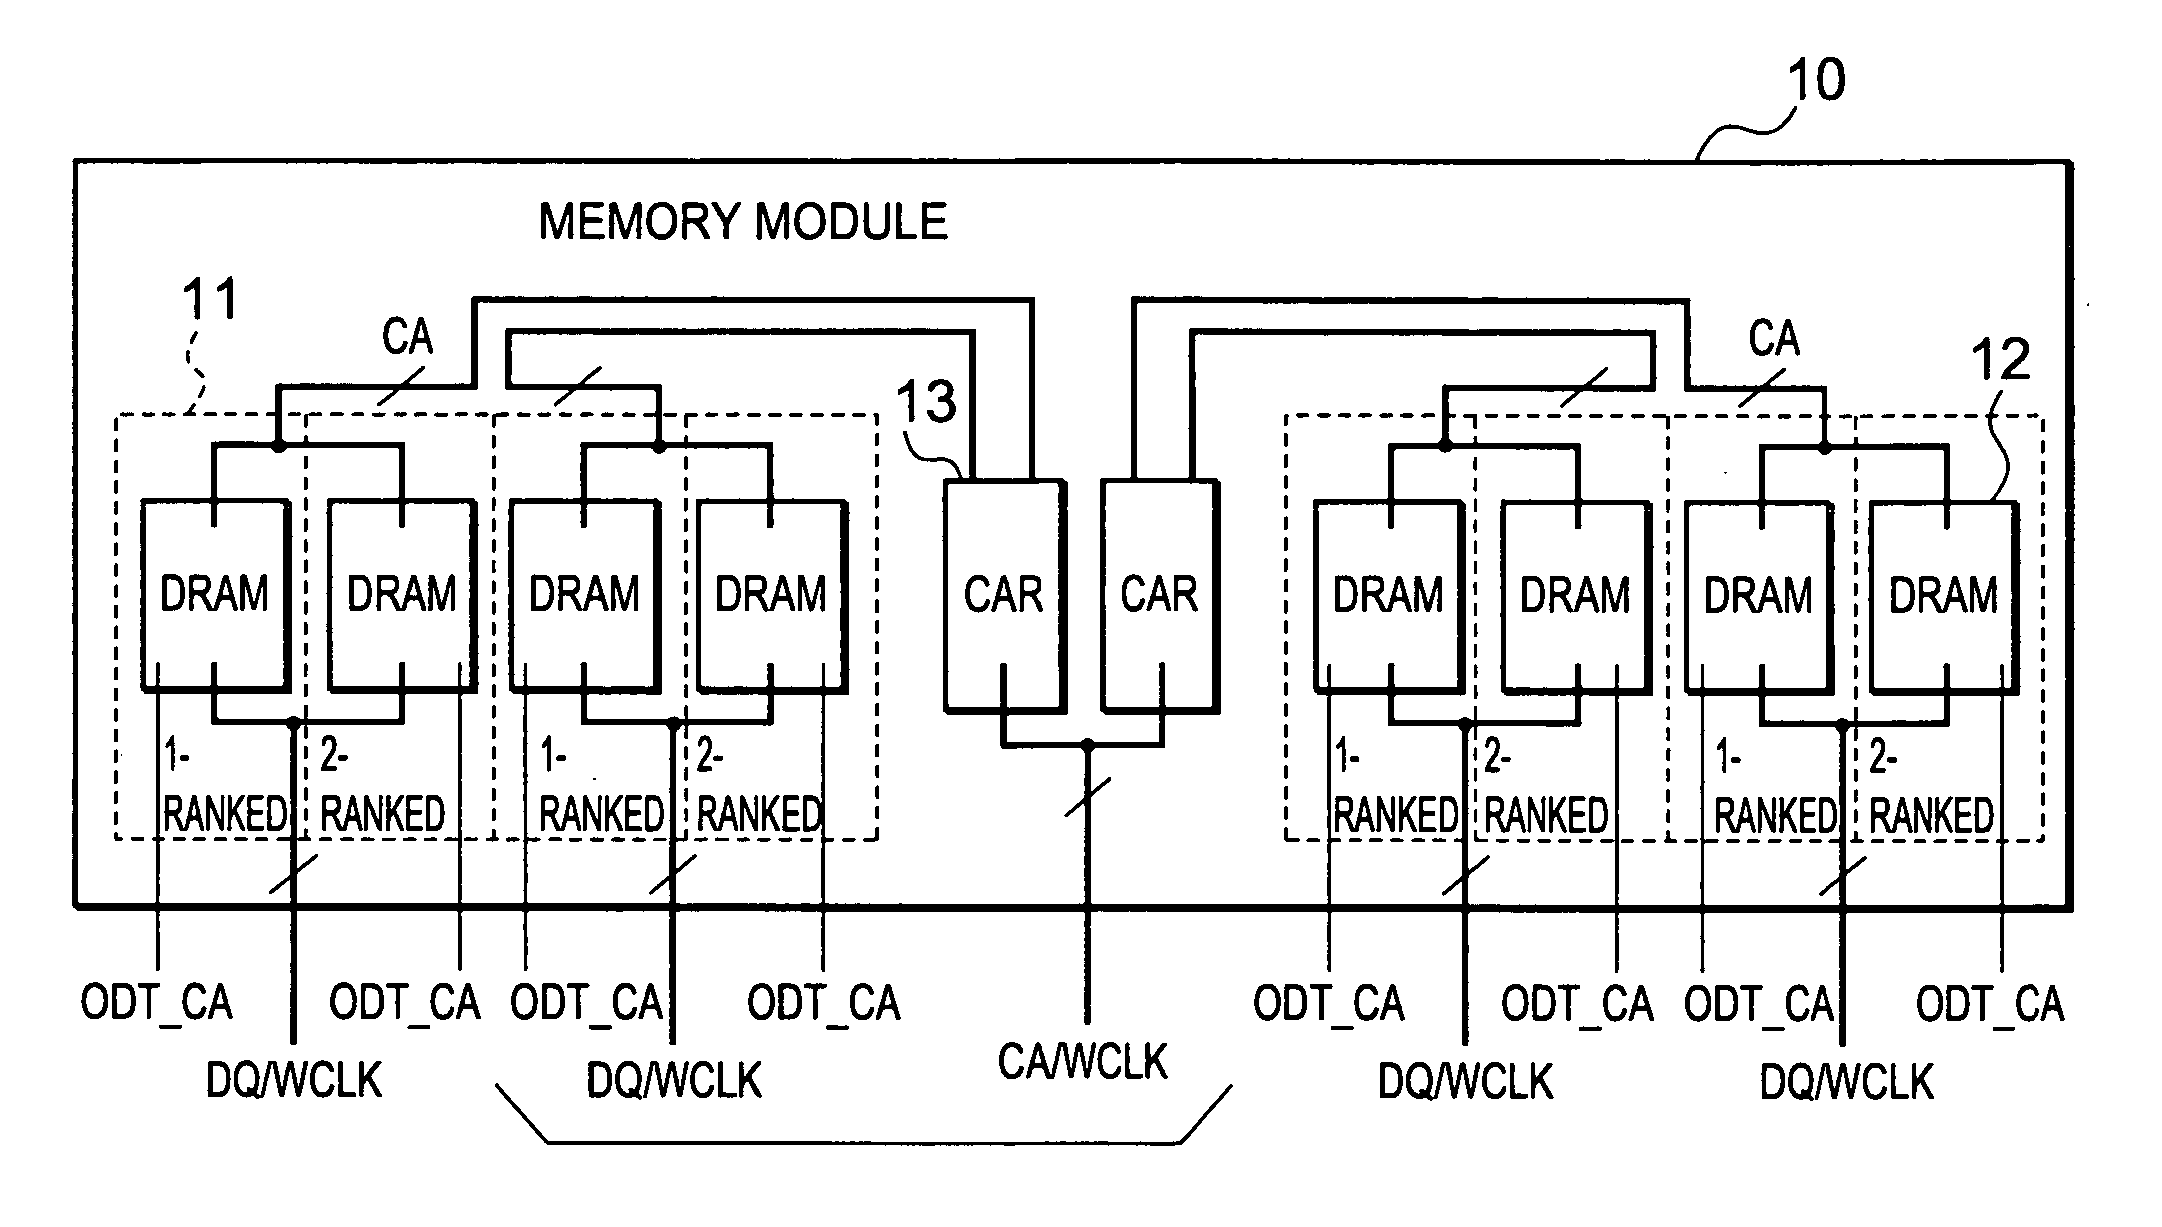 Memory module, memory chip, and memory system